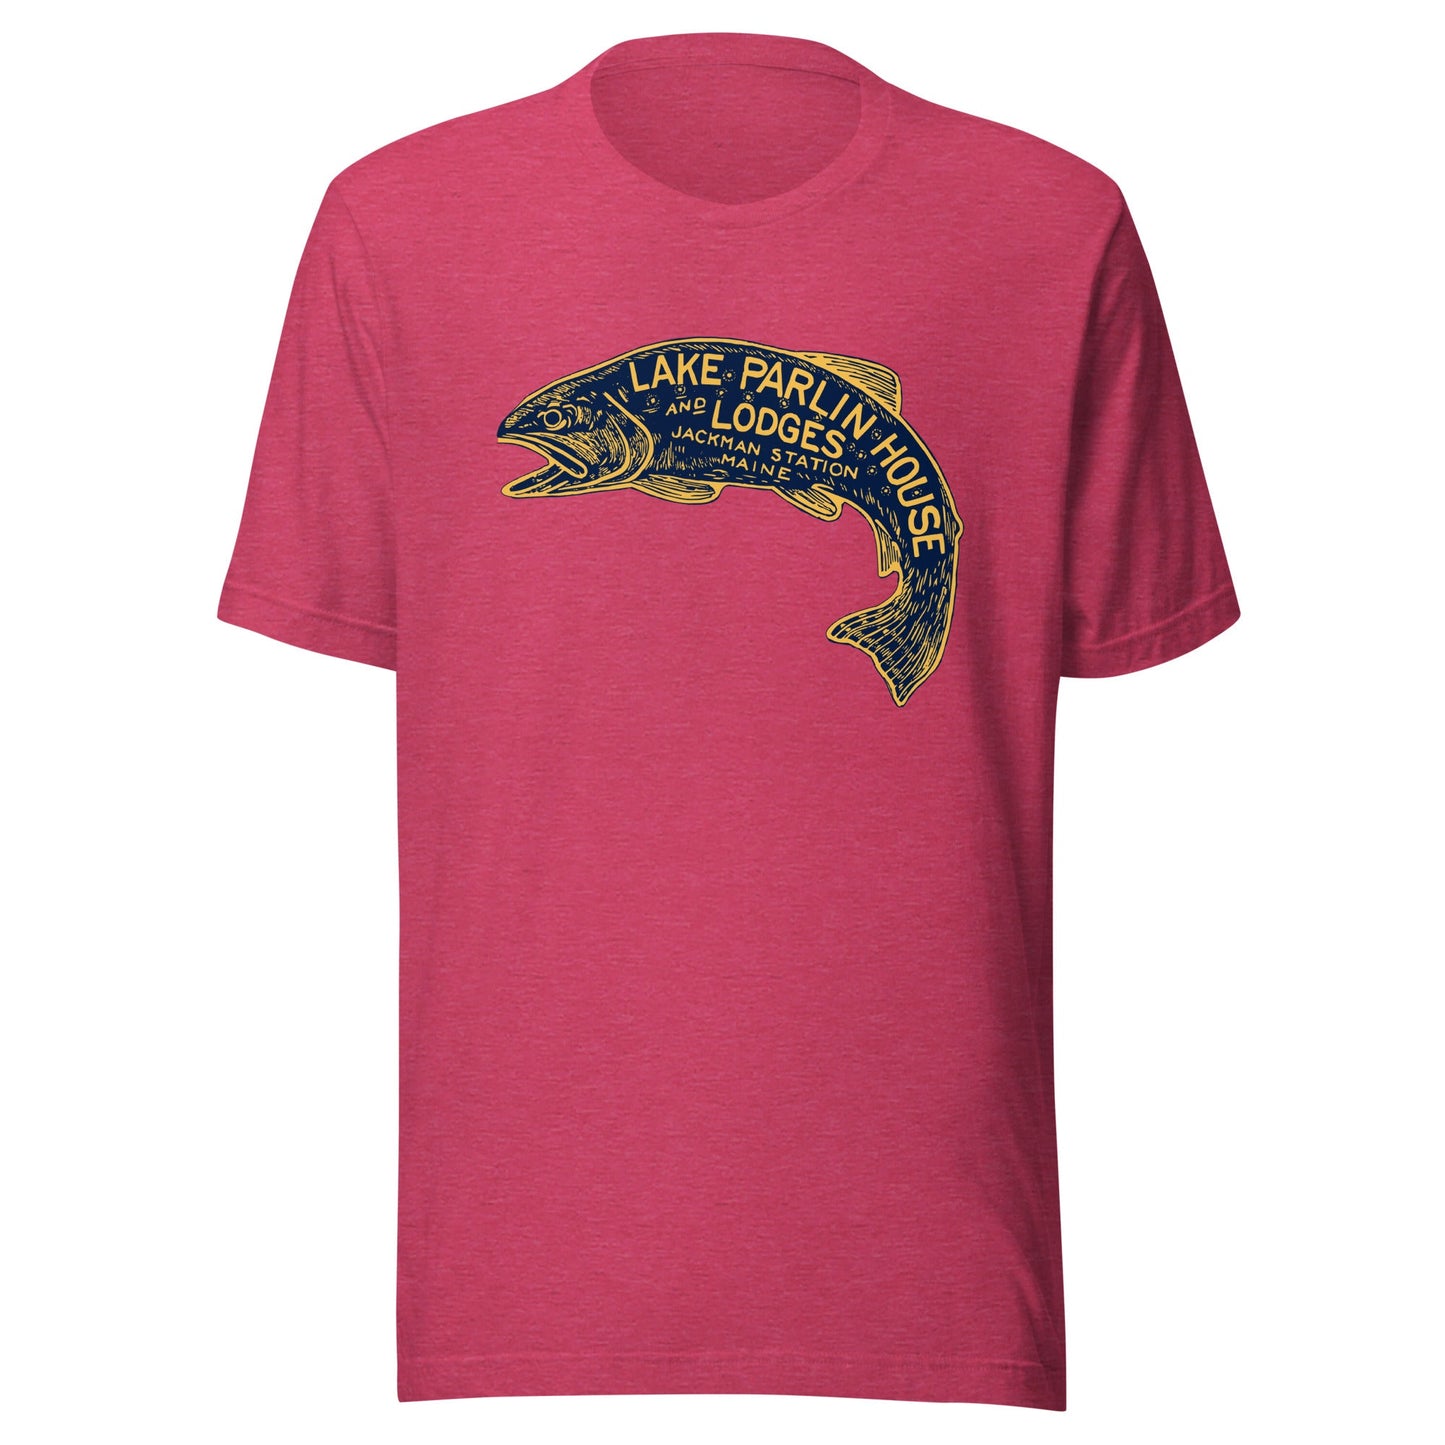 Maine Fishing T-Shirt - Lake Parlin Lodge Jackman Station, ME | Fishing & Hunting Tee